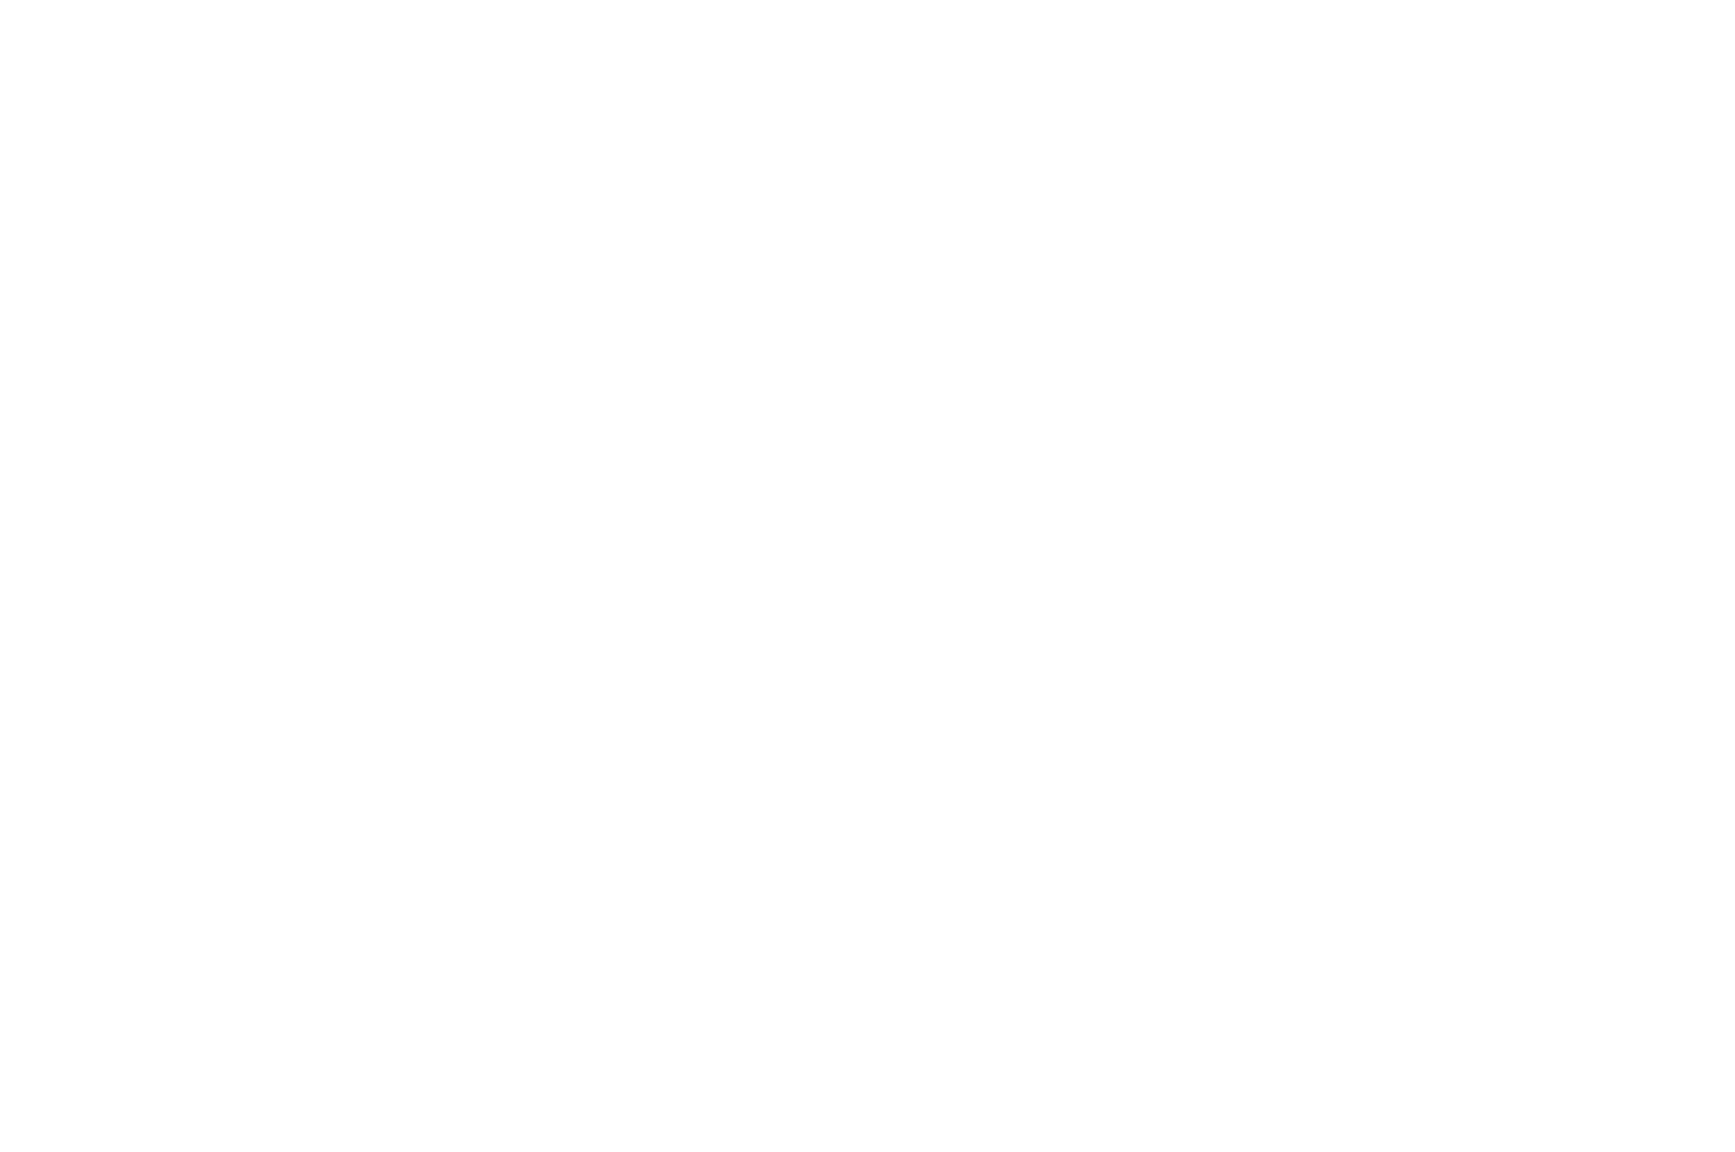 ORIGINAL SONG - Indie Short Fest - 2021